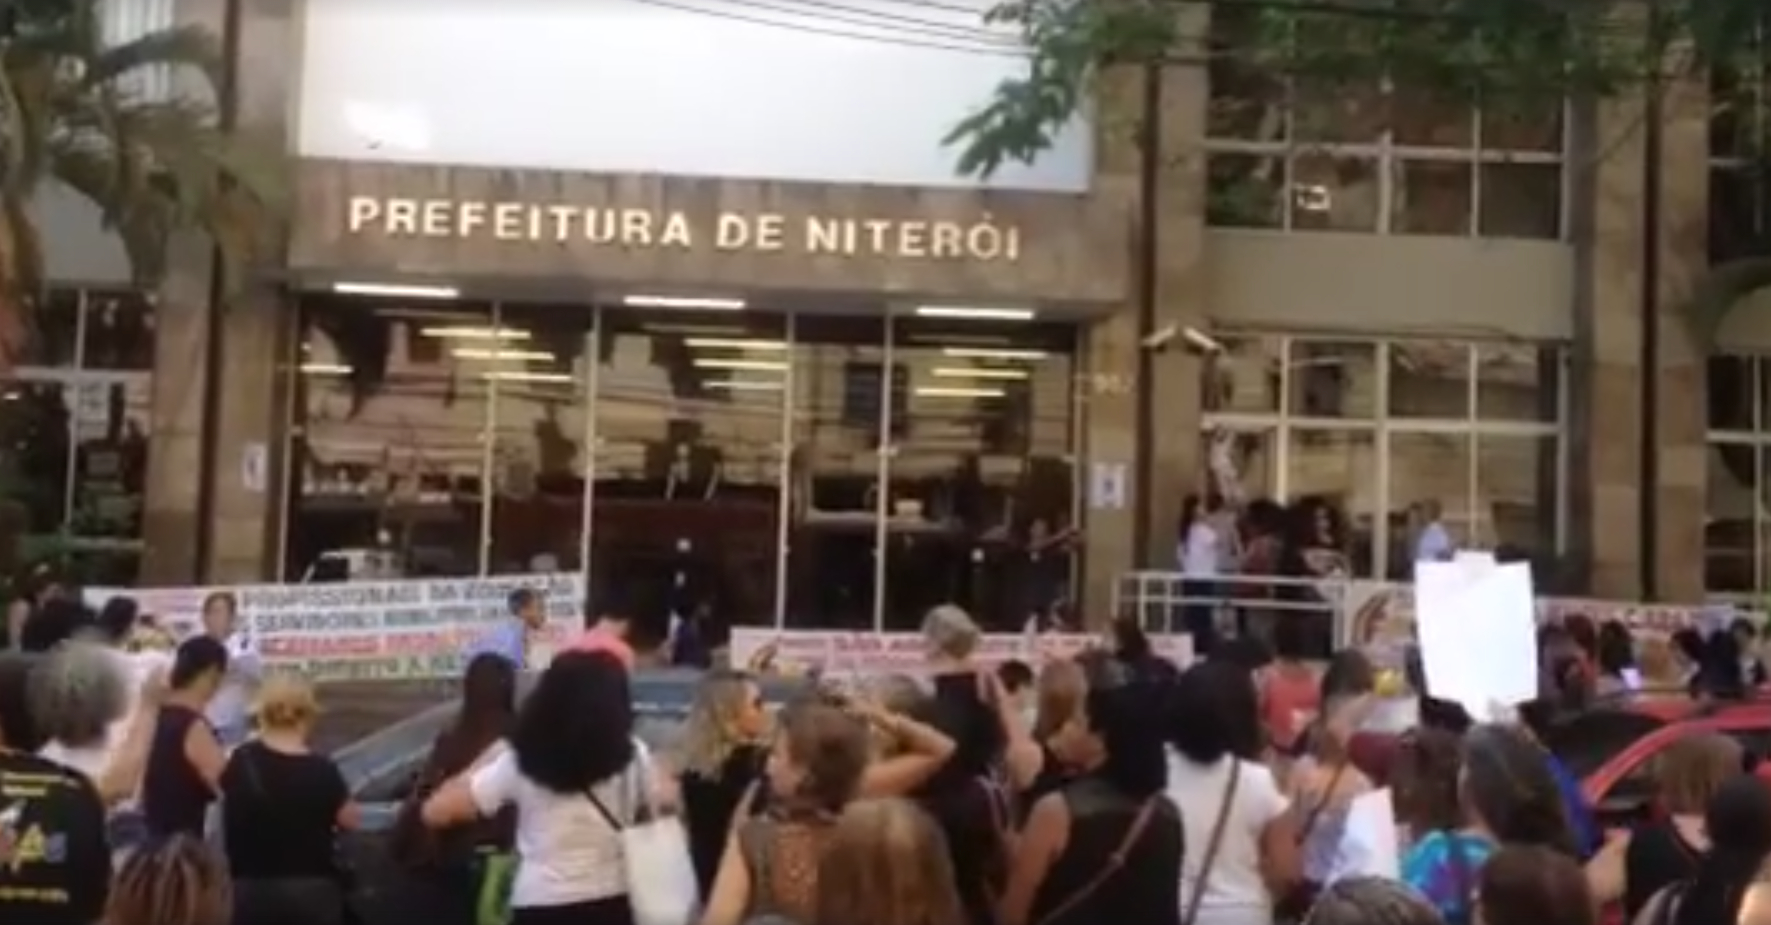 Protesto de professores na prefeitura de Niterói